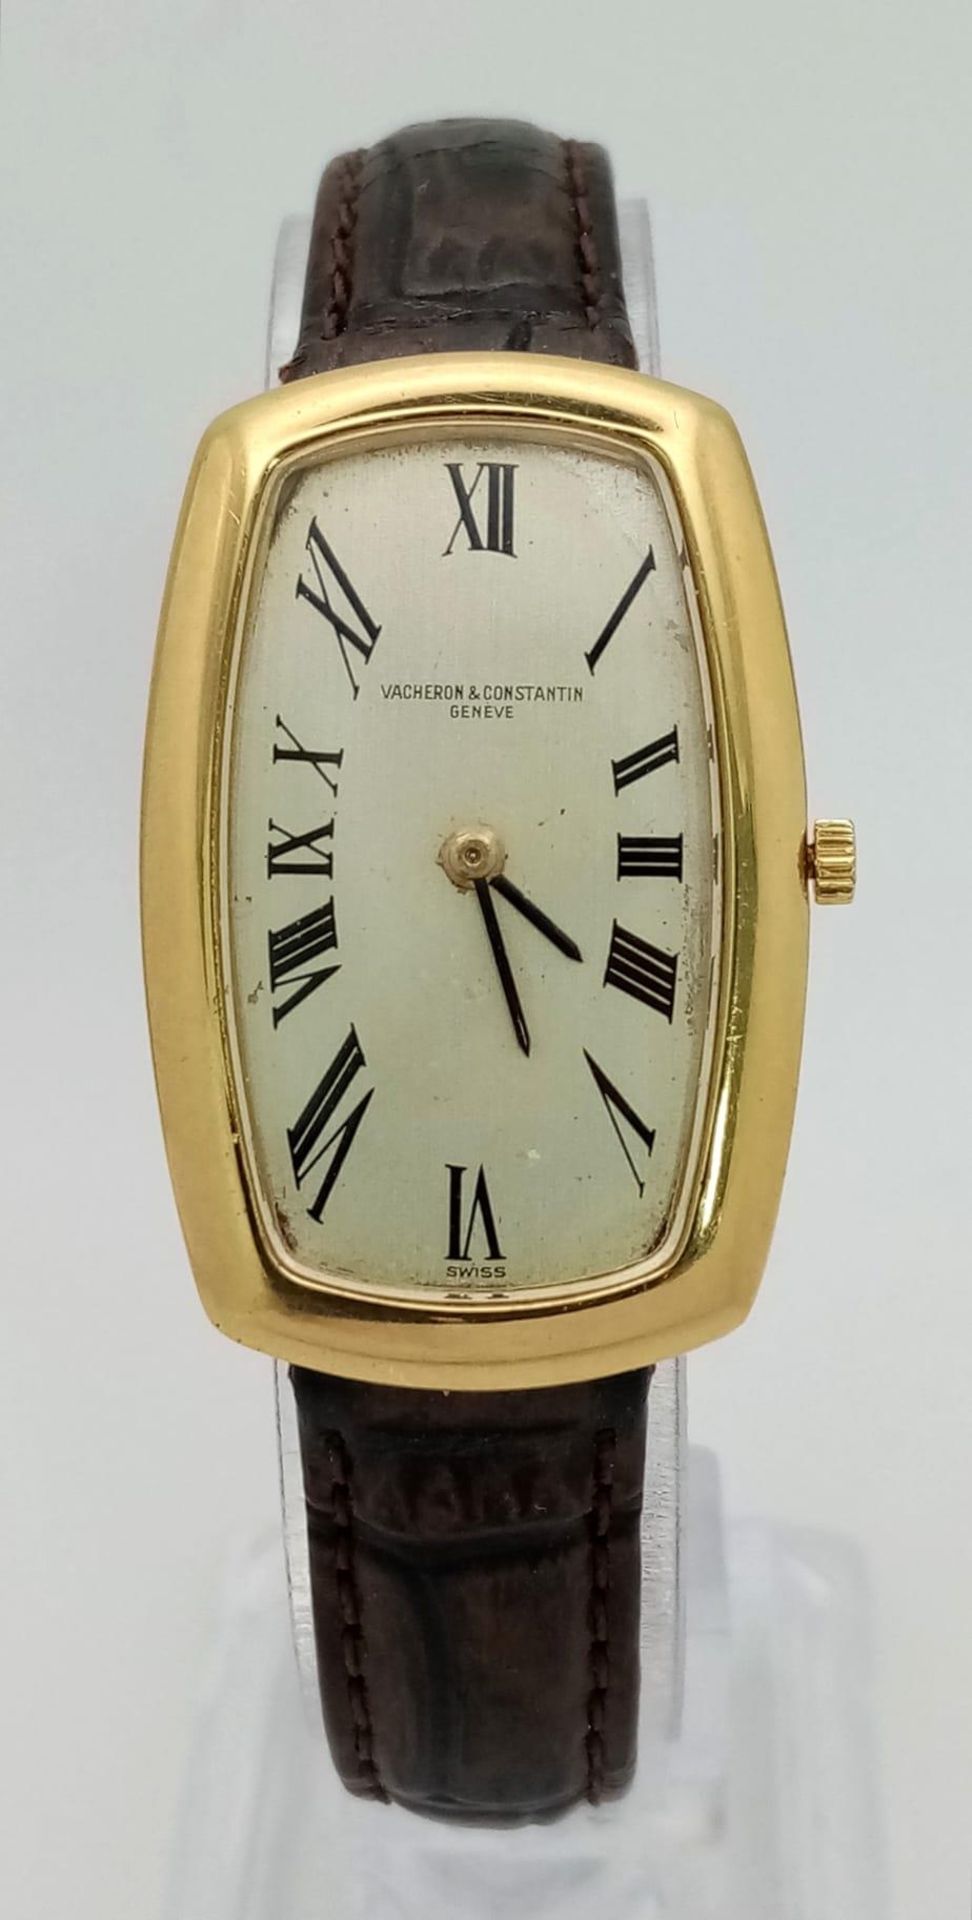 An 18 K yellow gold Vacheron & Constantin watch. 35 x 23 mm case, white dial with black roman